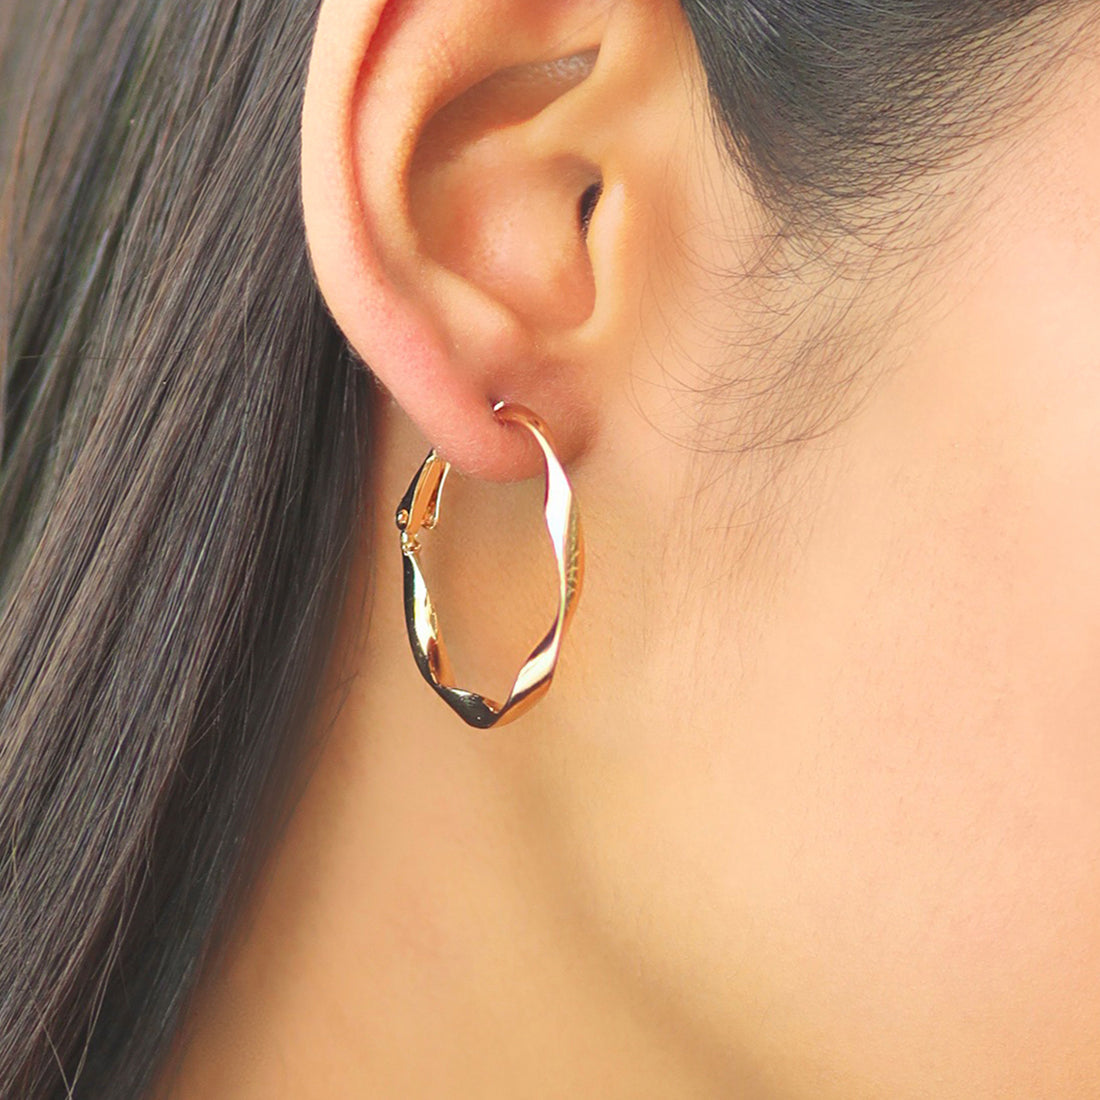 Set Of 2 Gold-Toned Twisted Hoops & Circular Pearl Drop Earrings